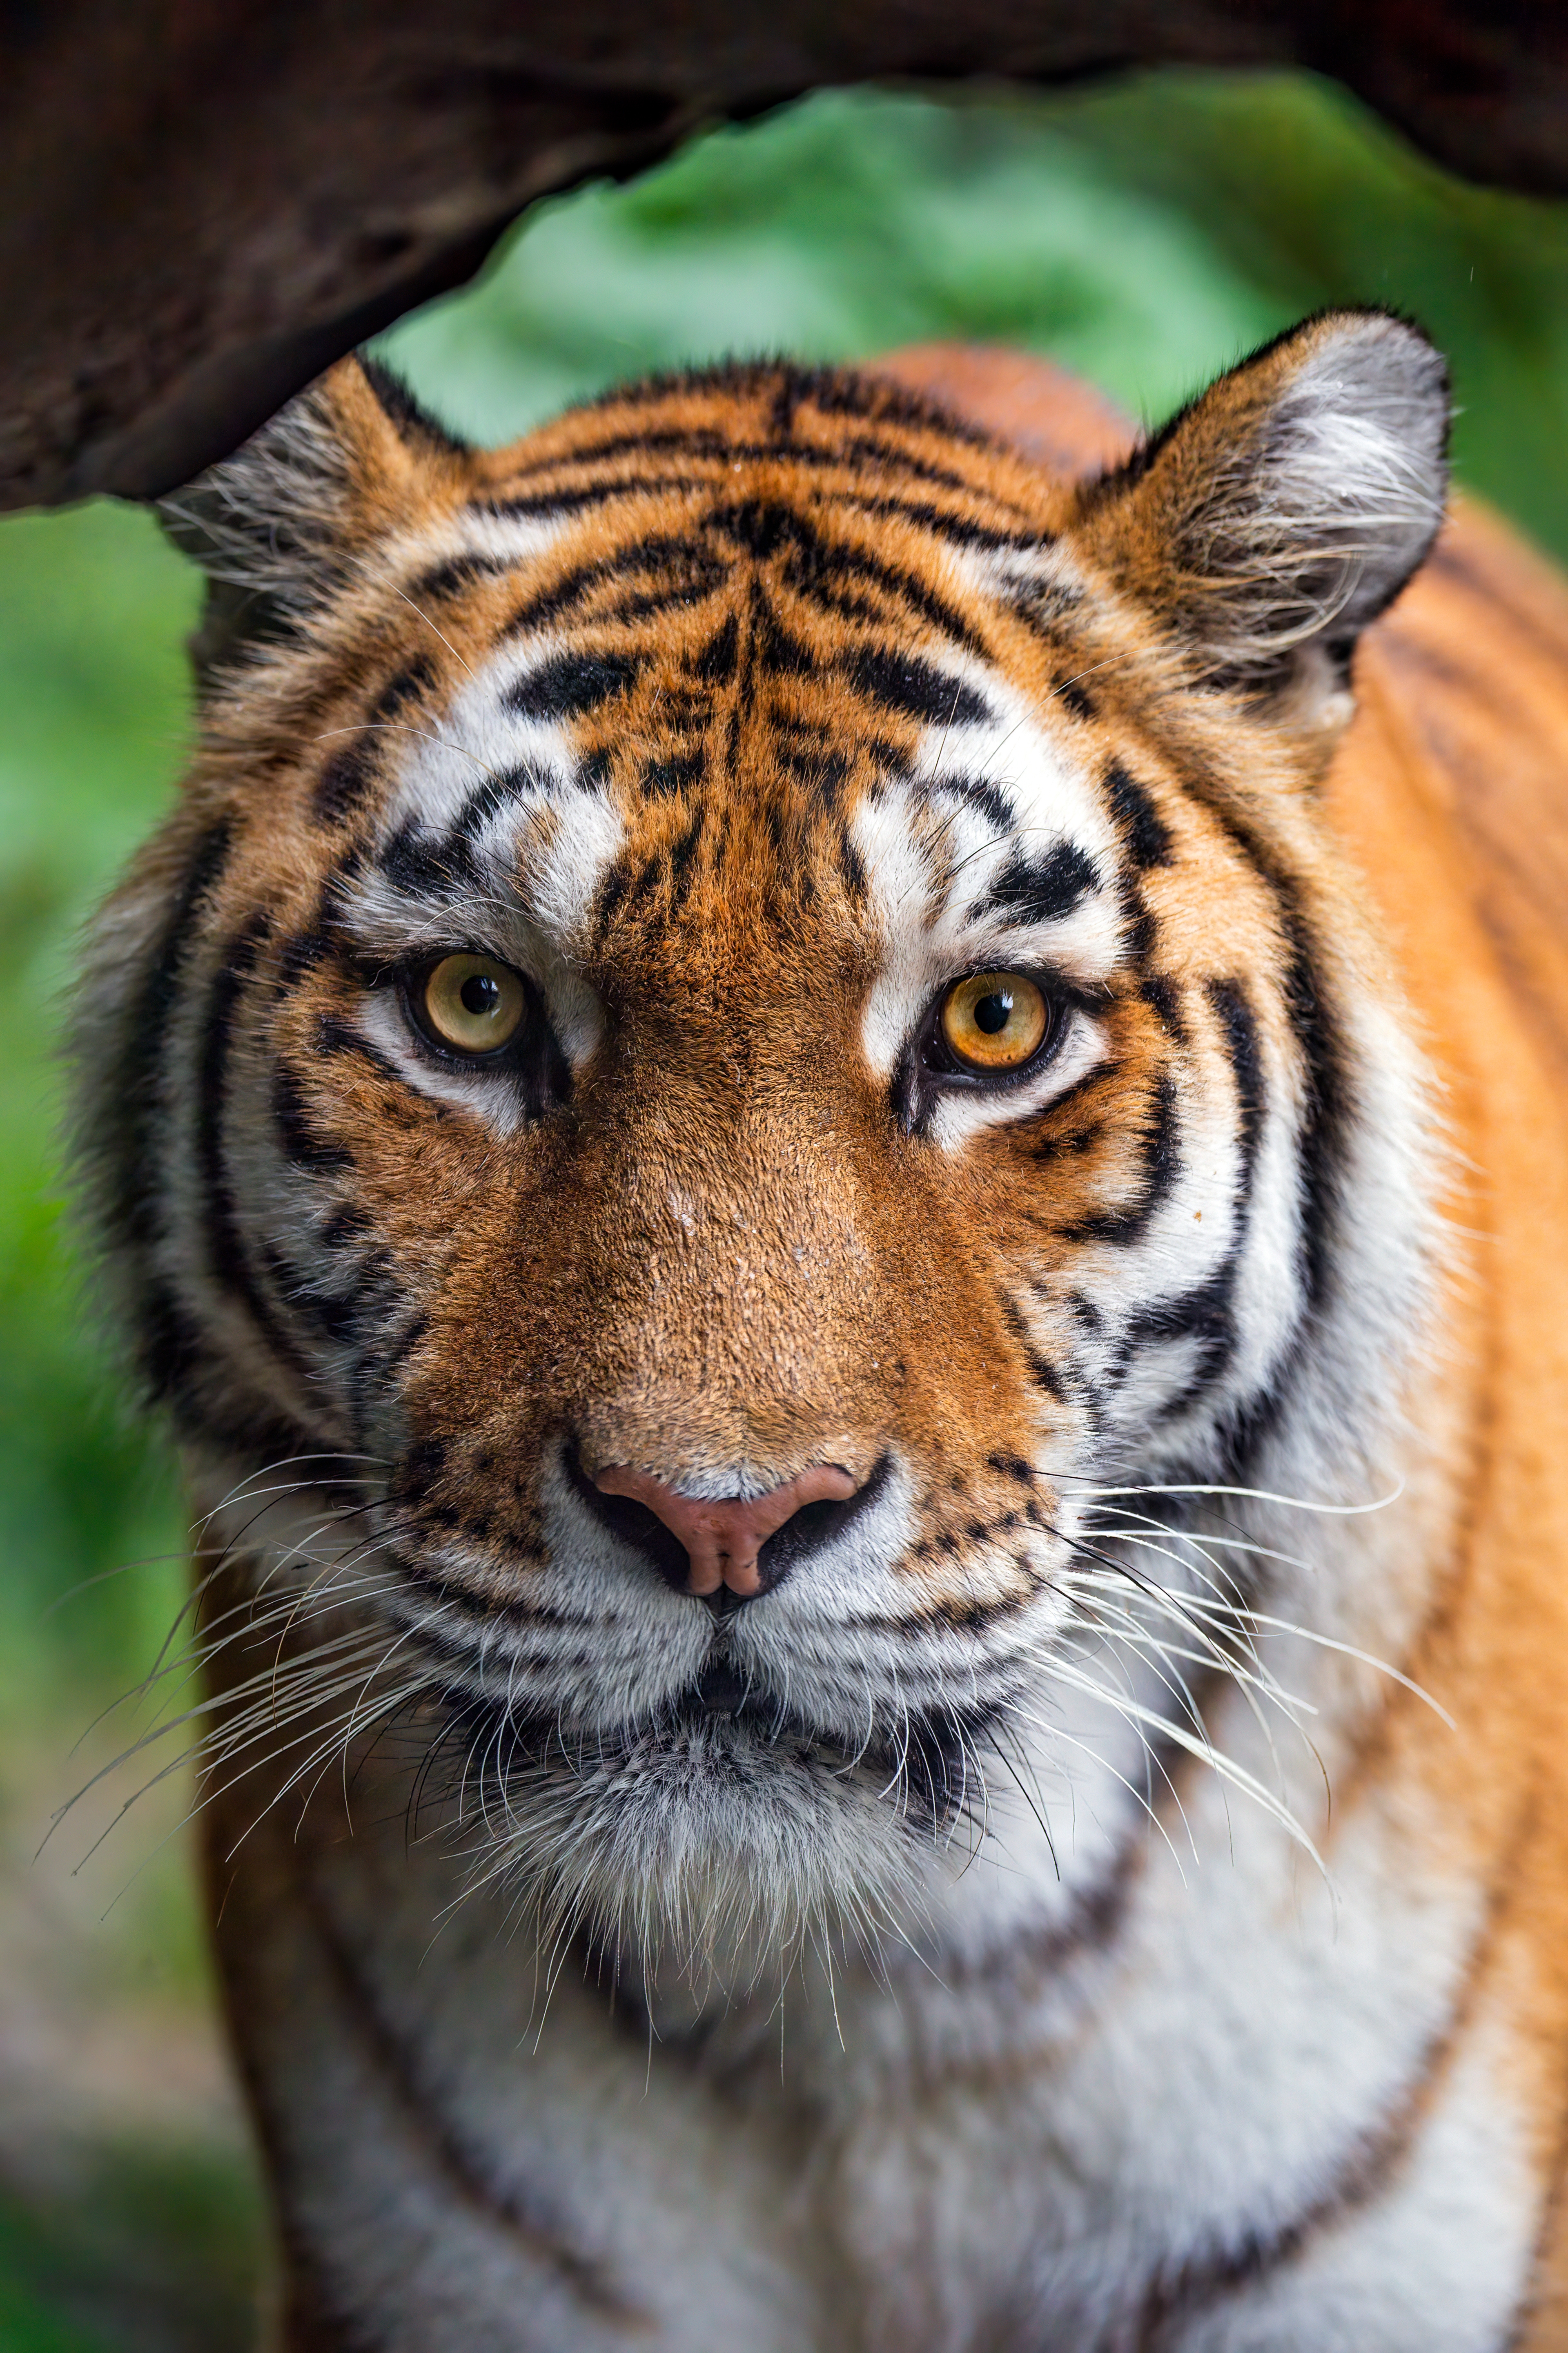 HD wallpaper, Amur Tiger, Siberian Tiger, Closeup